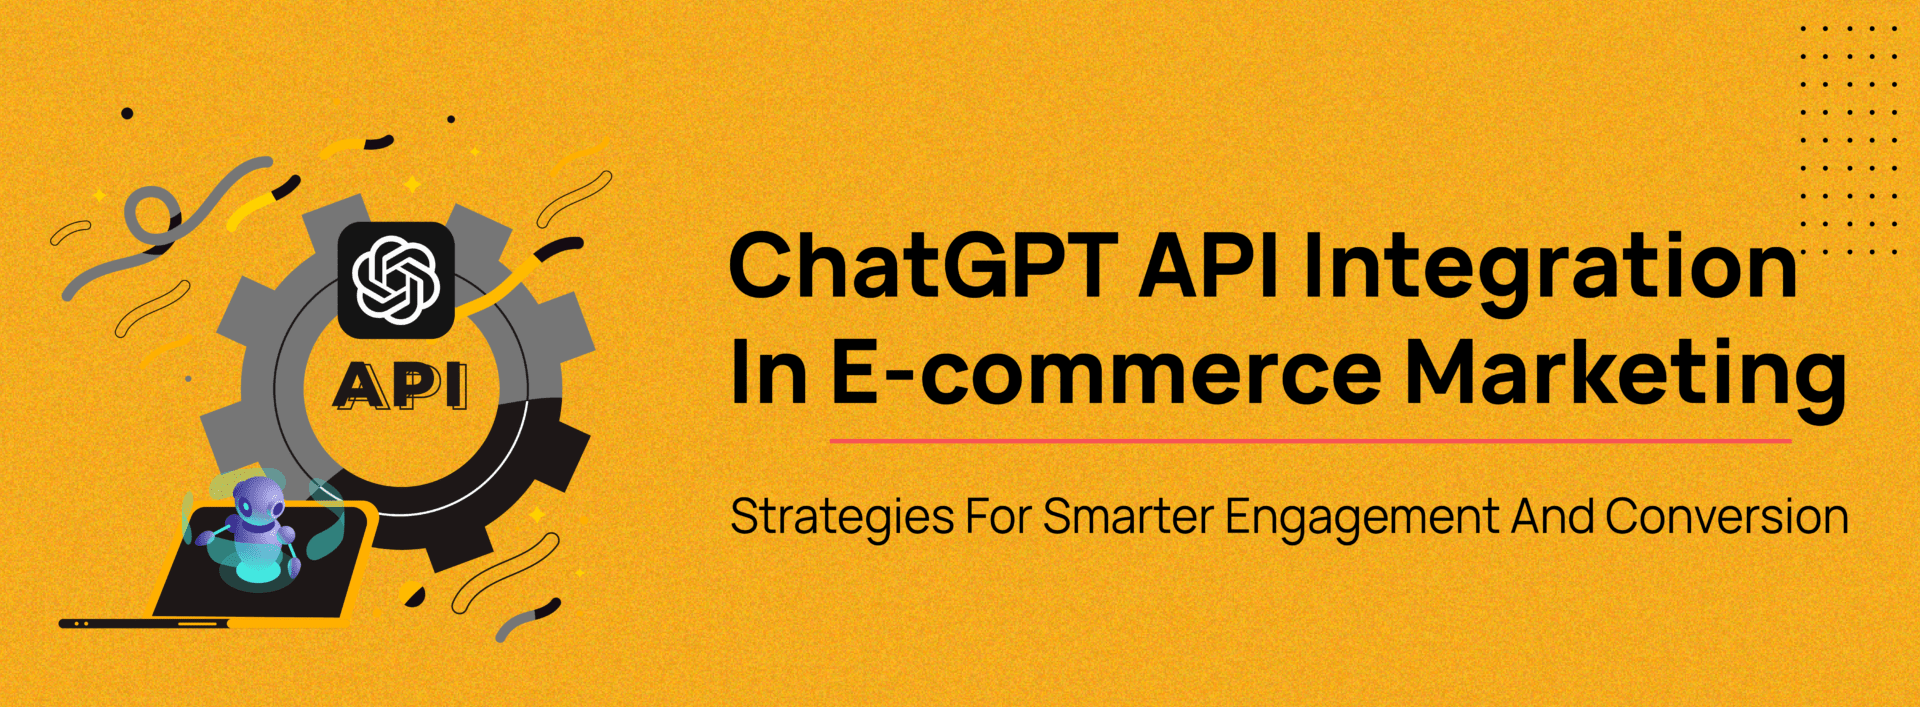 chatgpt API integration